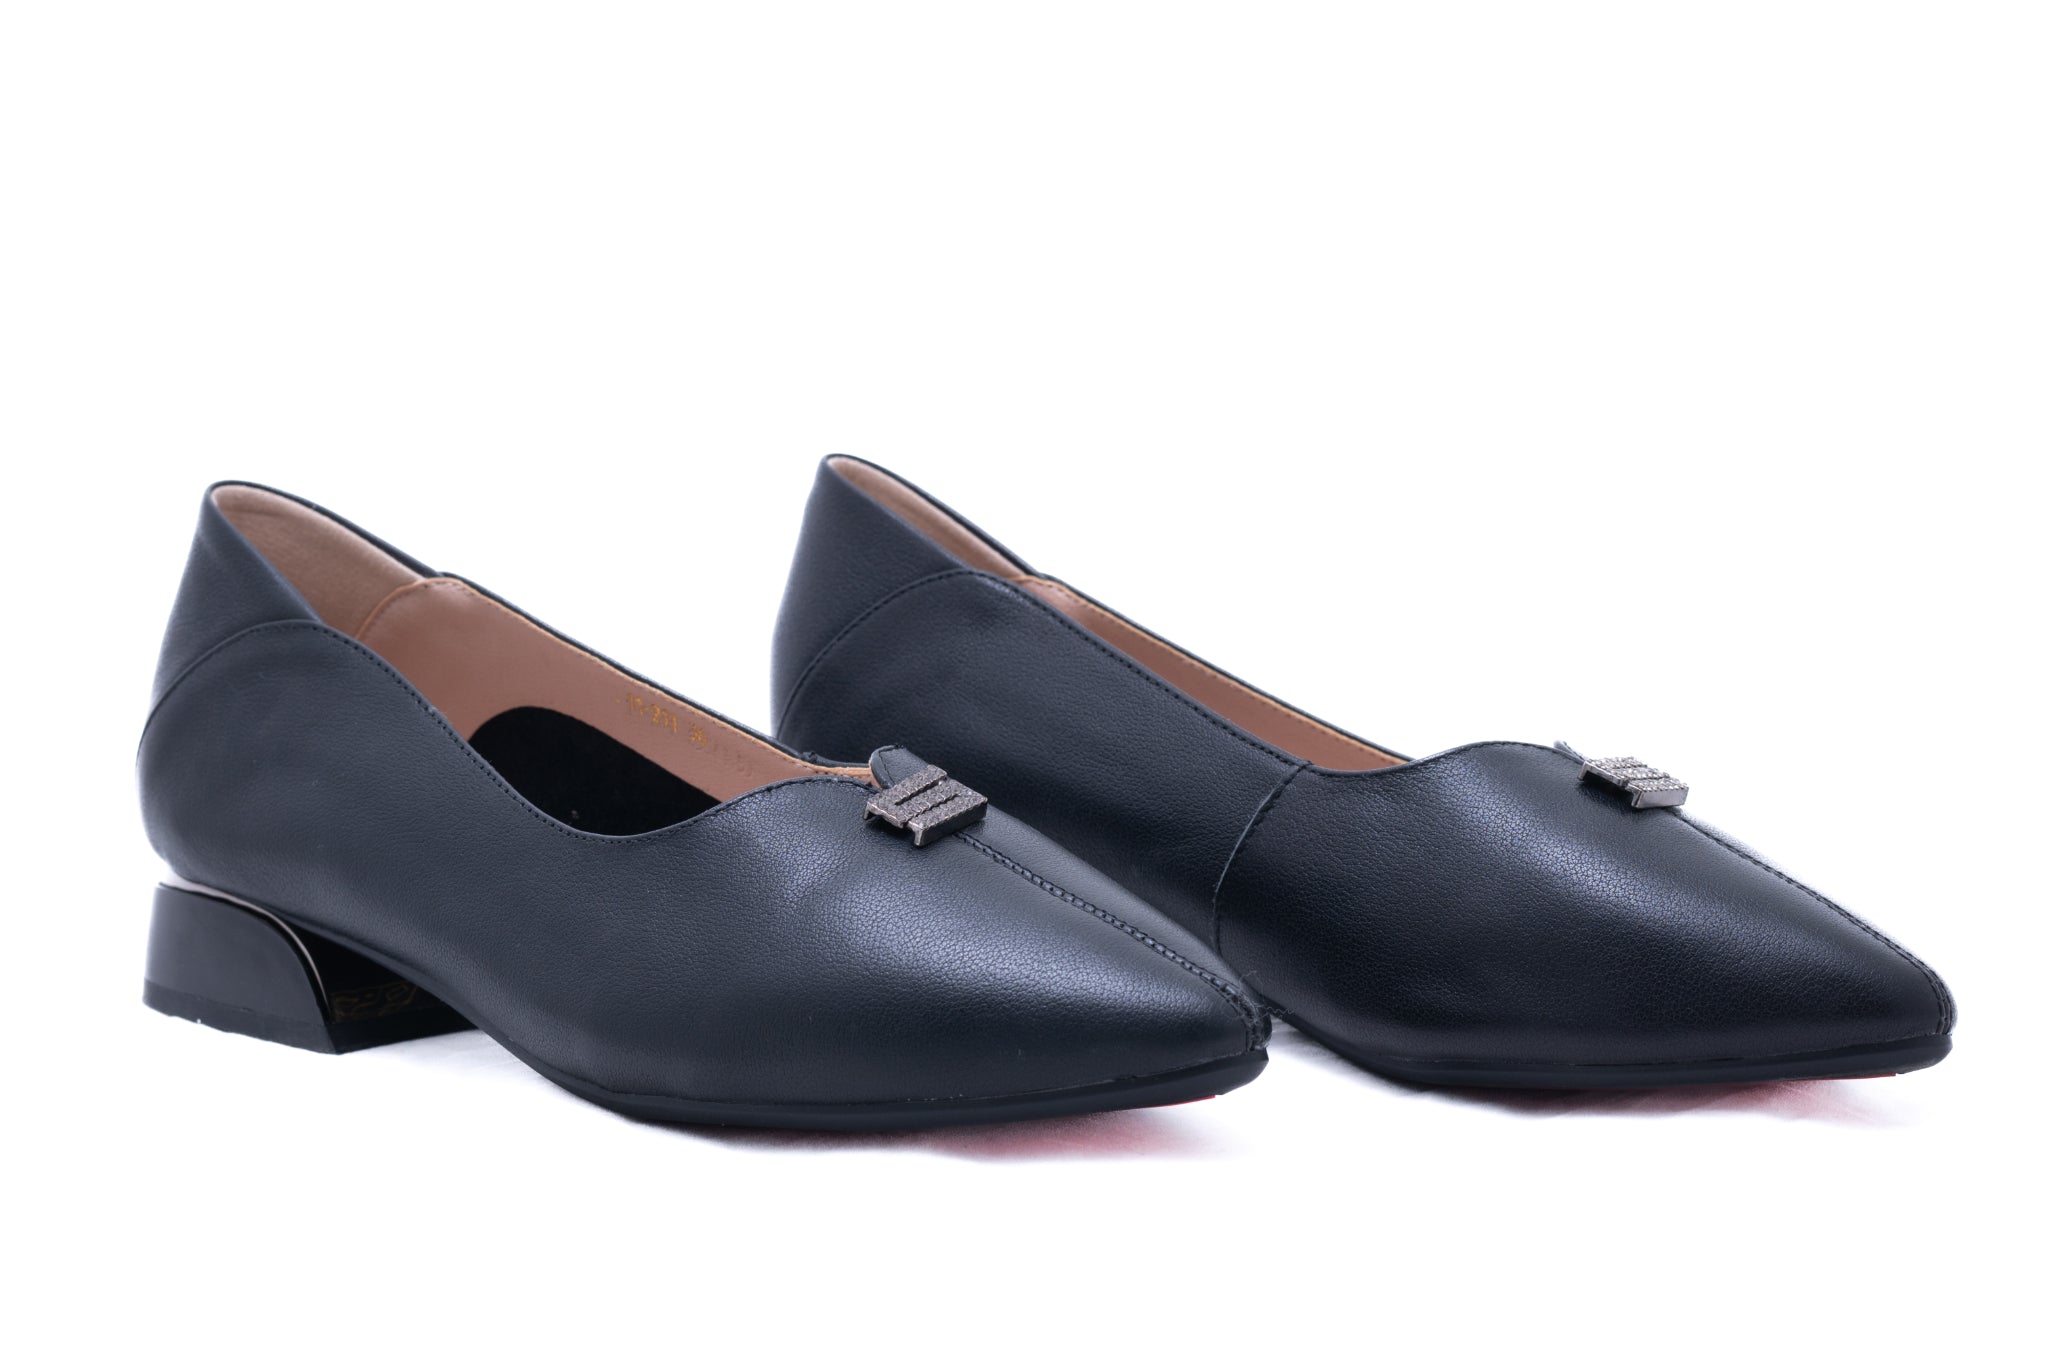 Pantofi dama eleganti piele naturala 11-211 negru